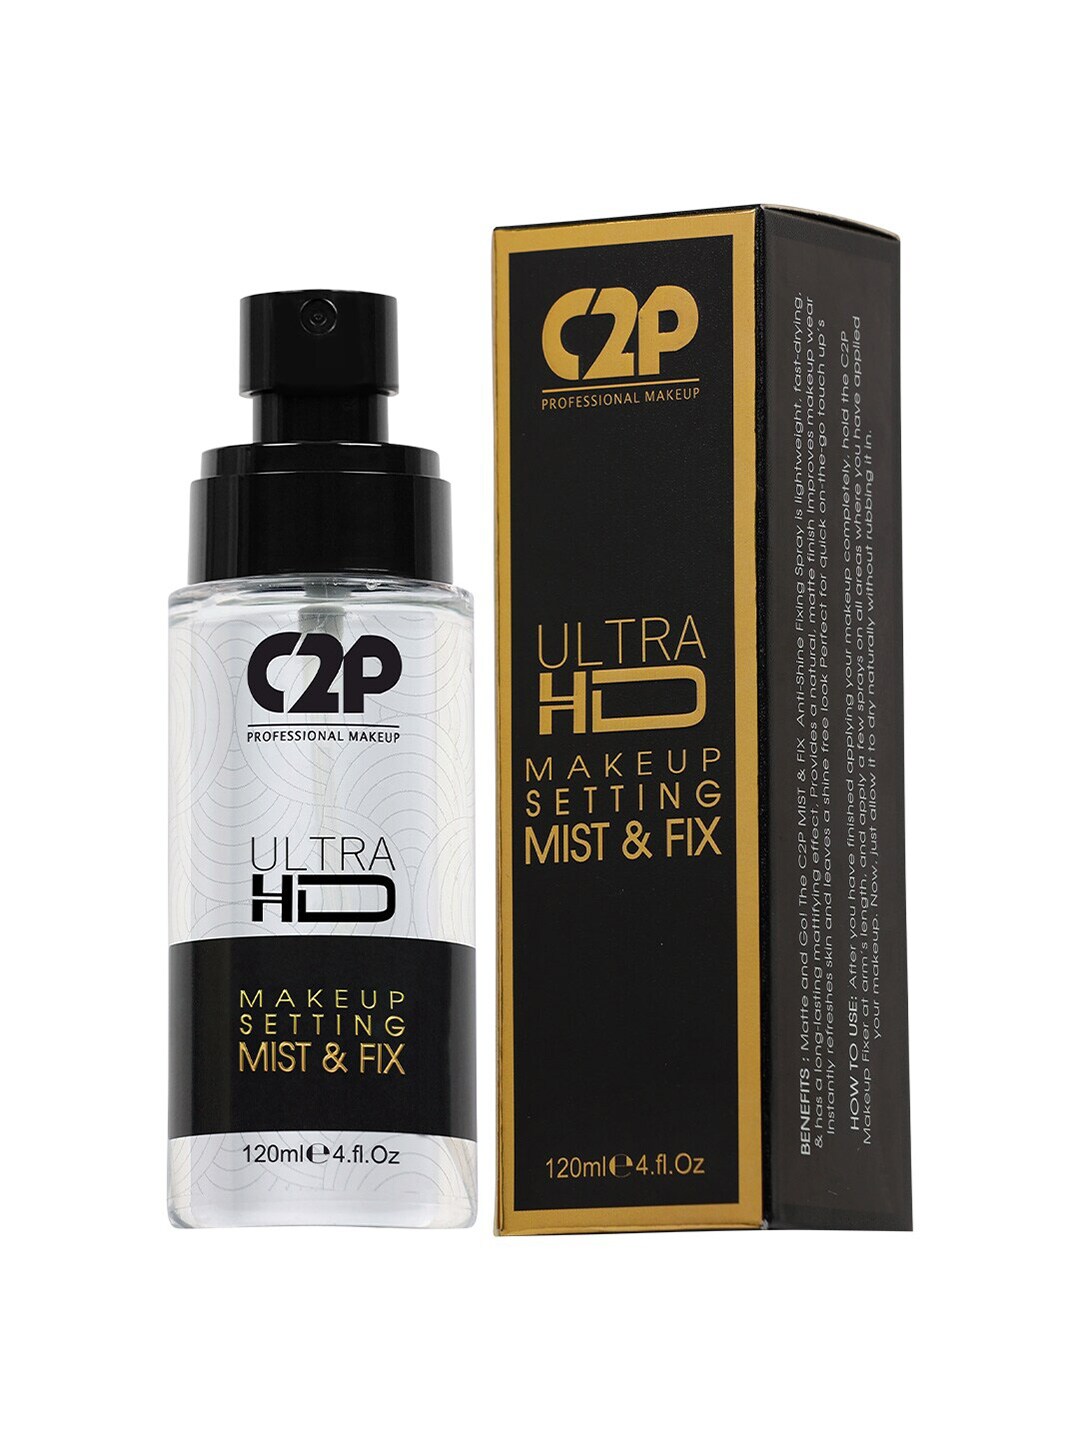 C2P PROFESSIONAL MAKEUP Ultra HD Makeup Setting Mist & Fix Spray - Transparent Price in India